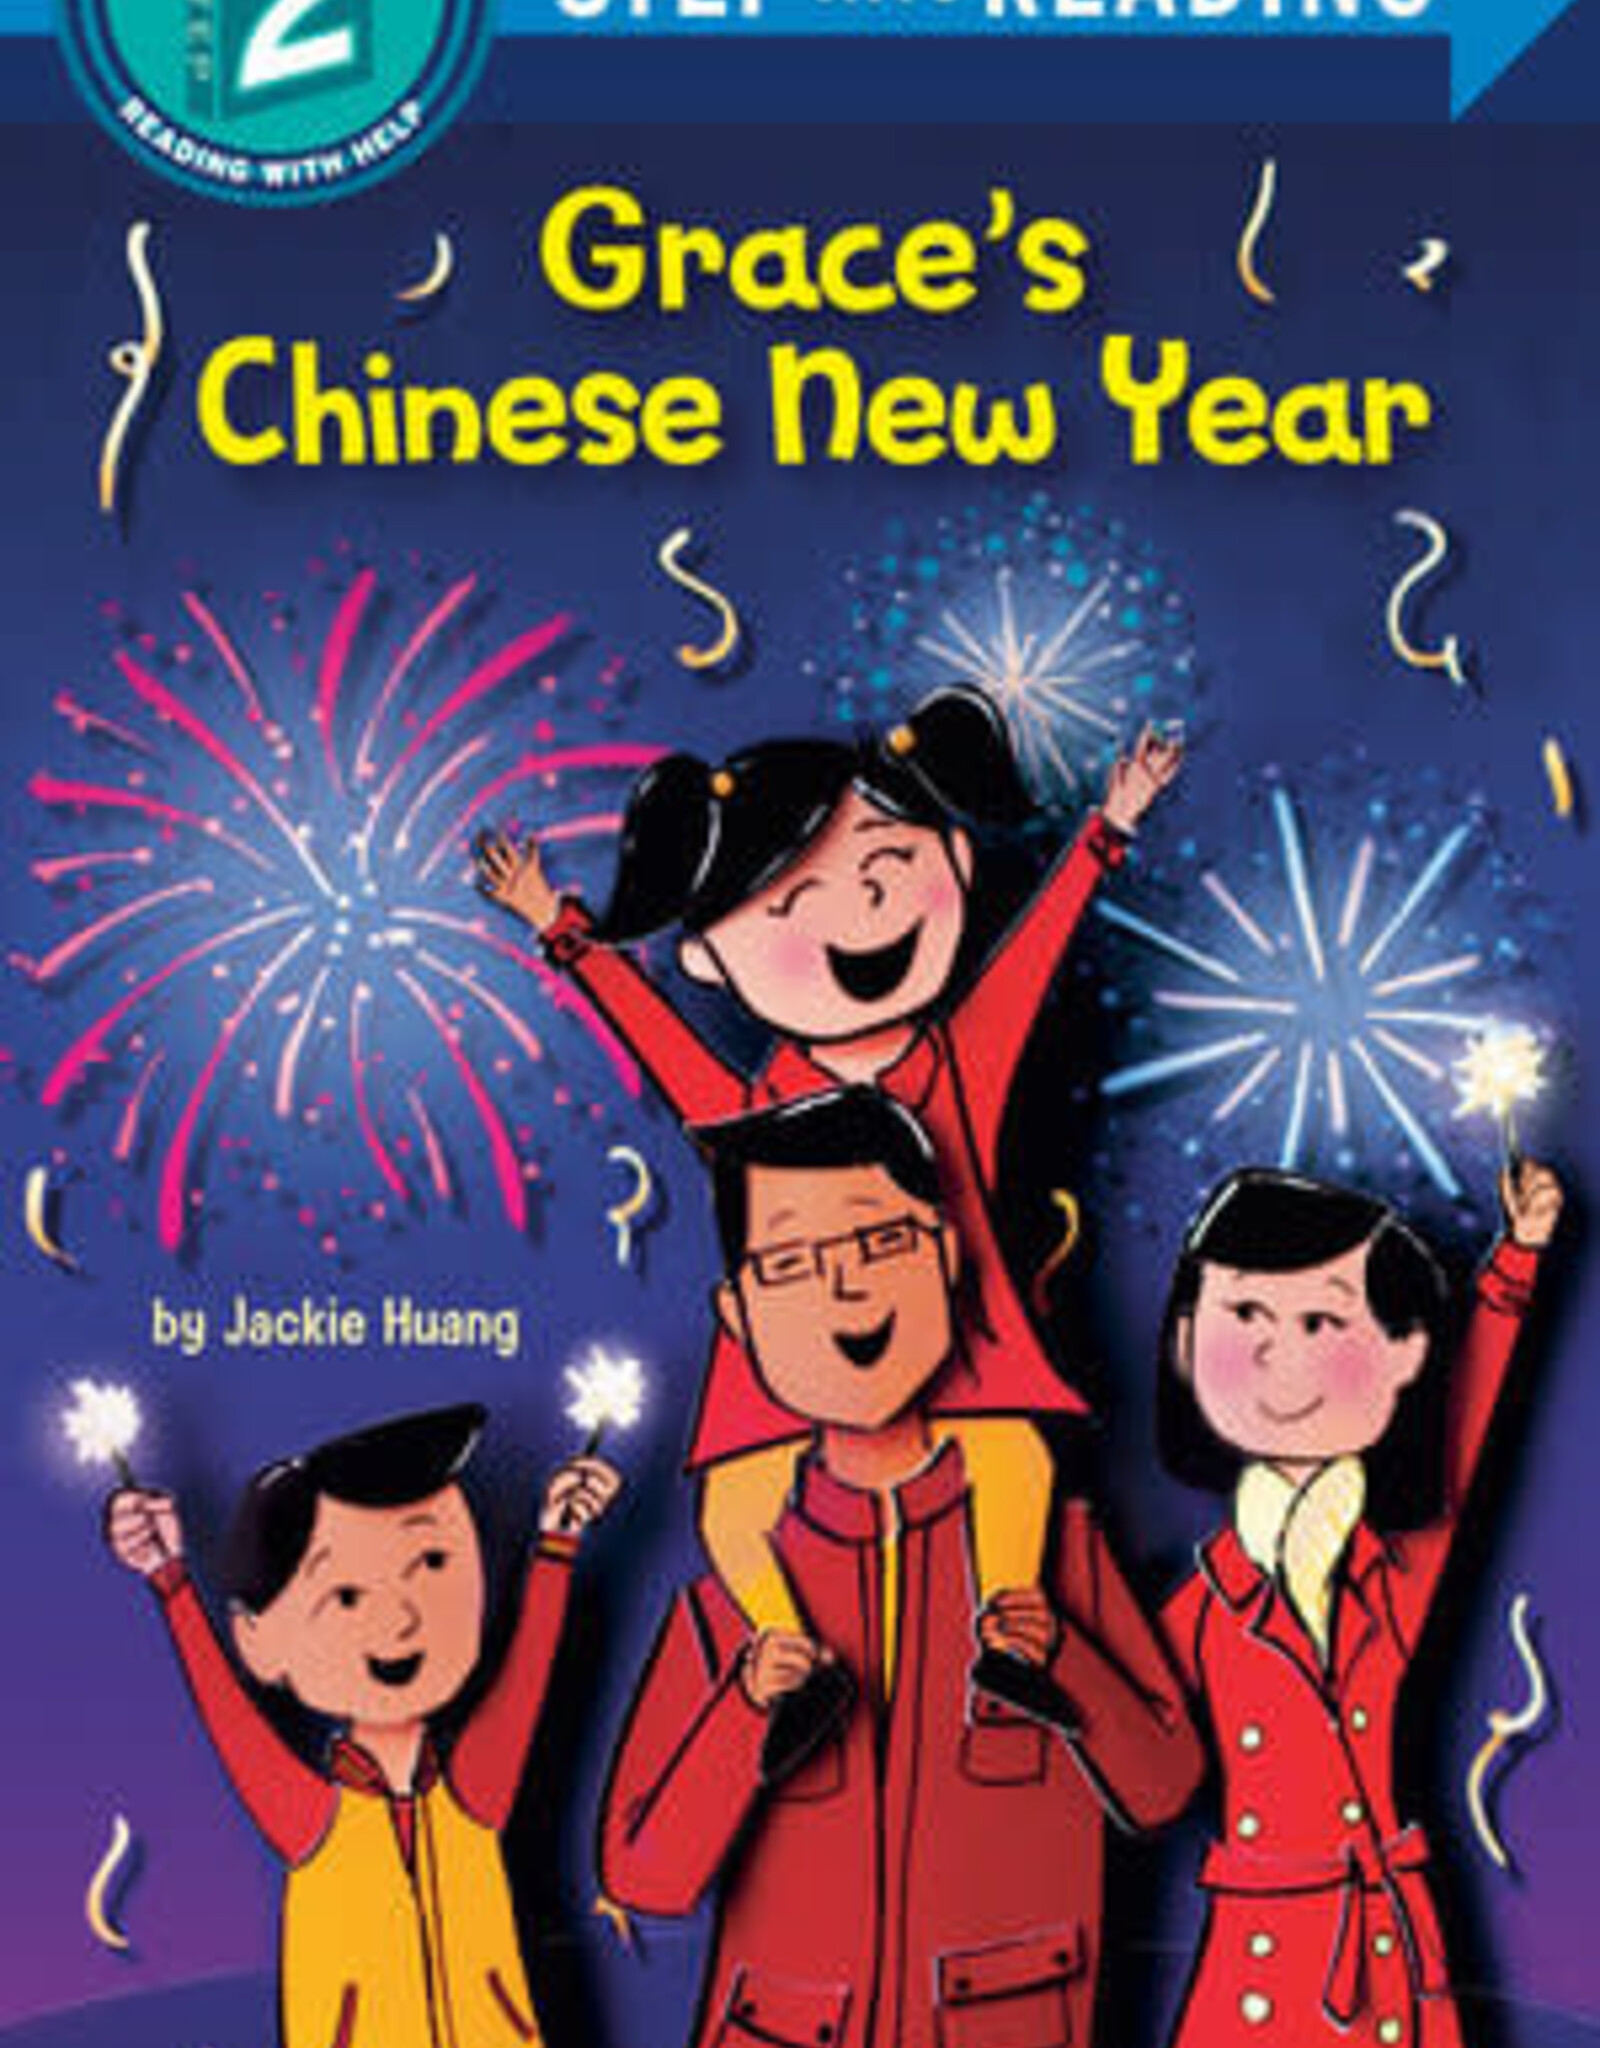 Random House/Penguin Grace's Chinese New Year